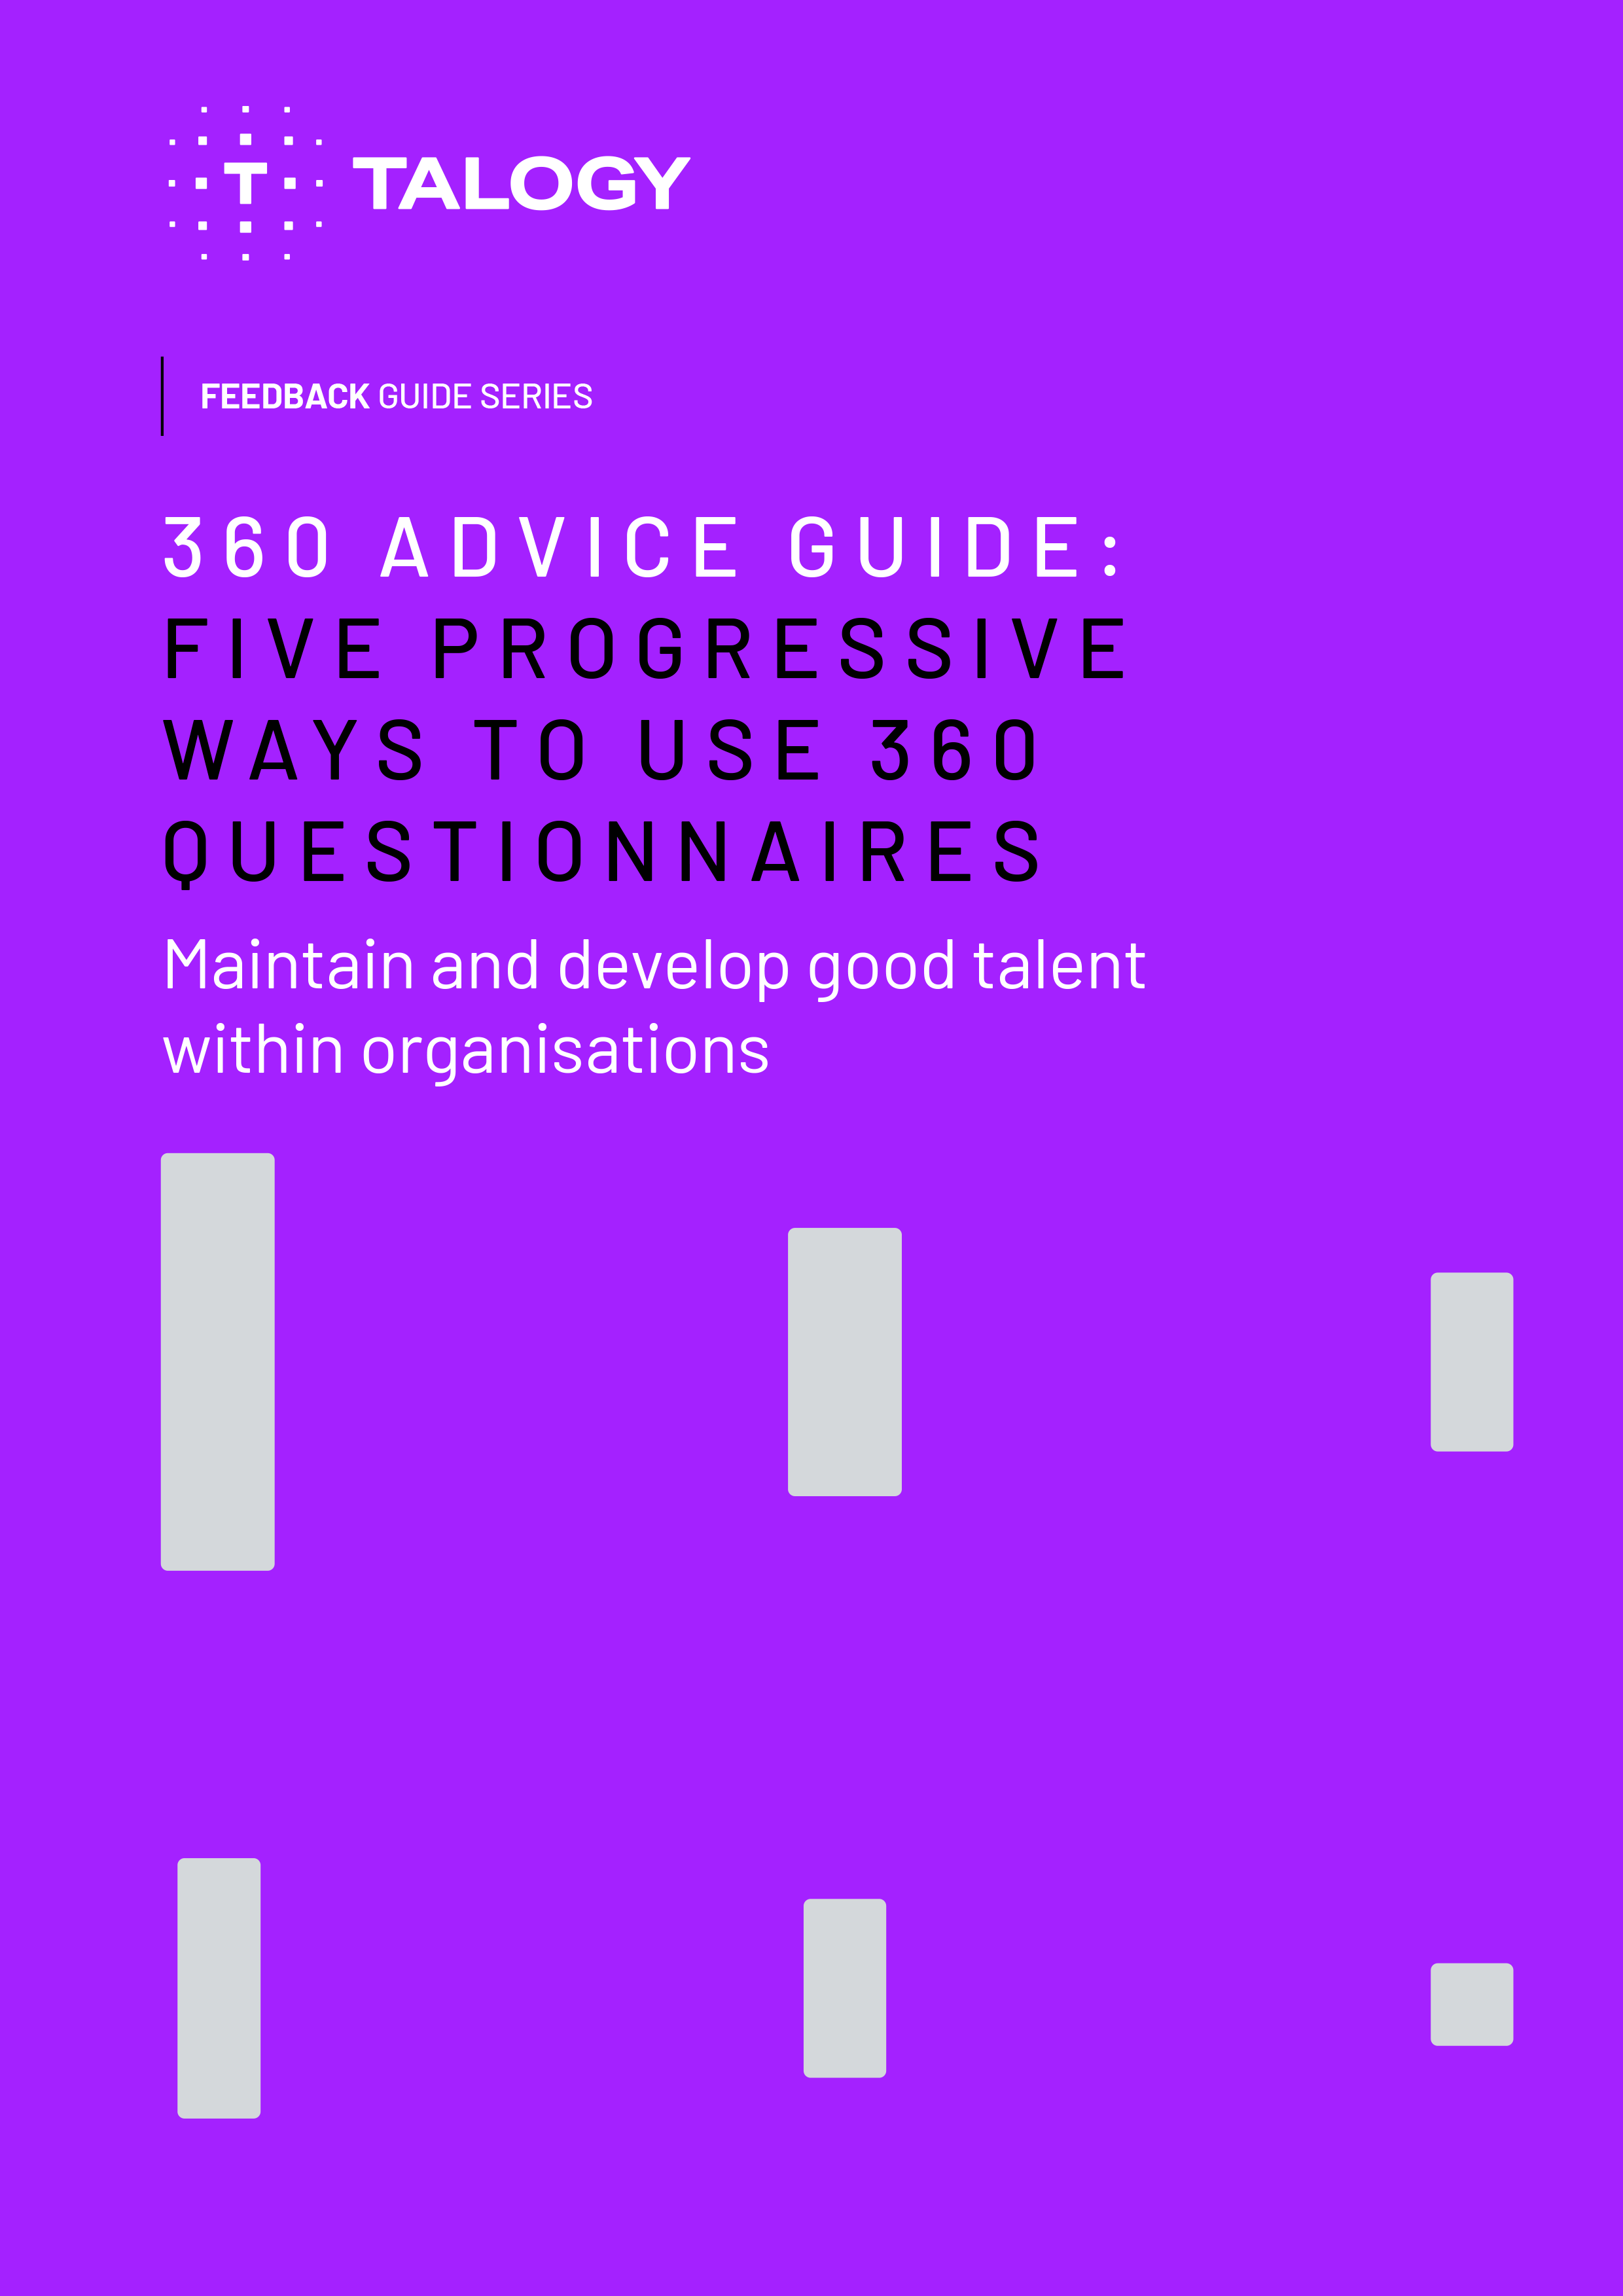 Five progressive ways to use 360 questionaires